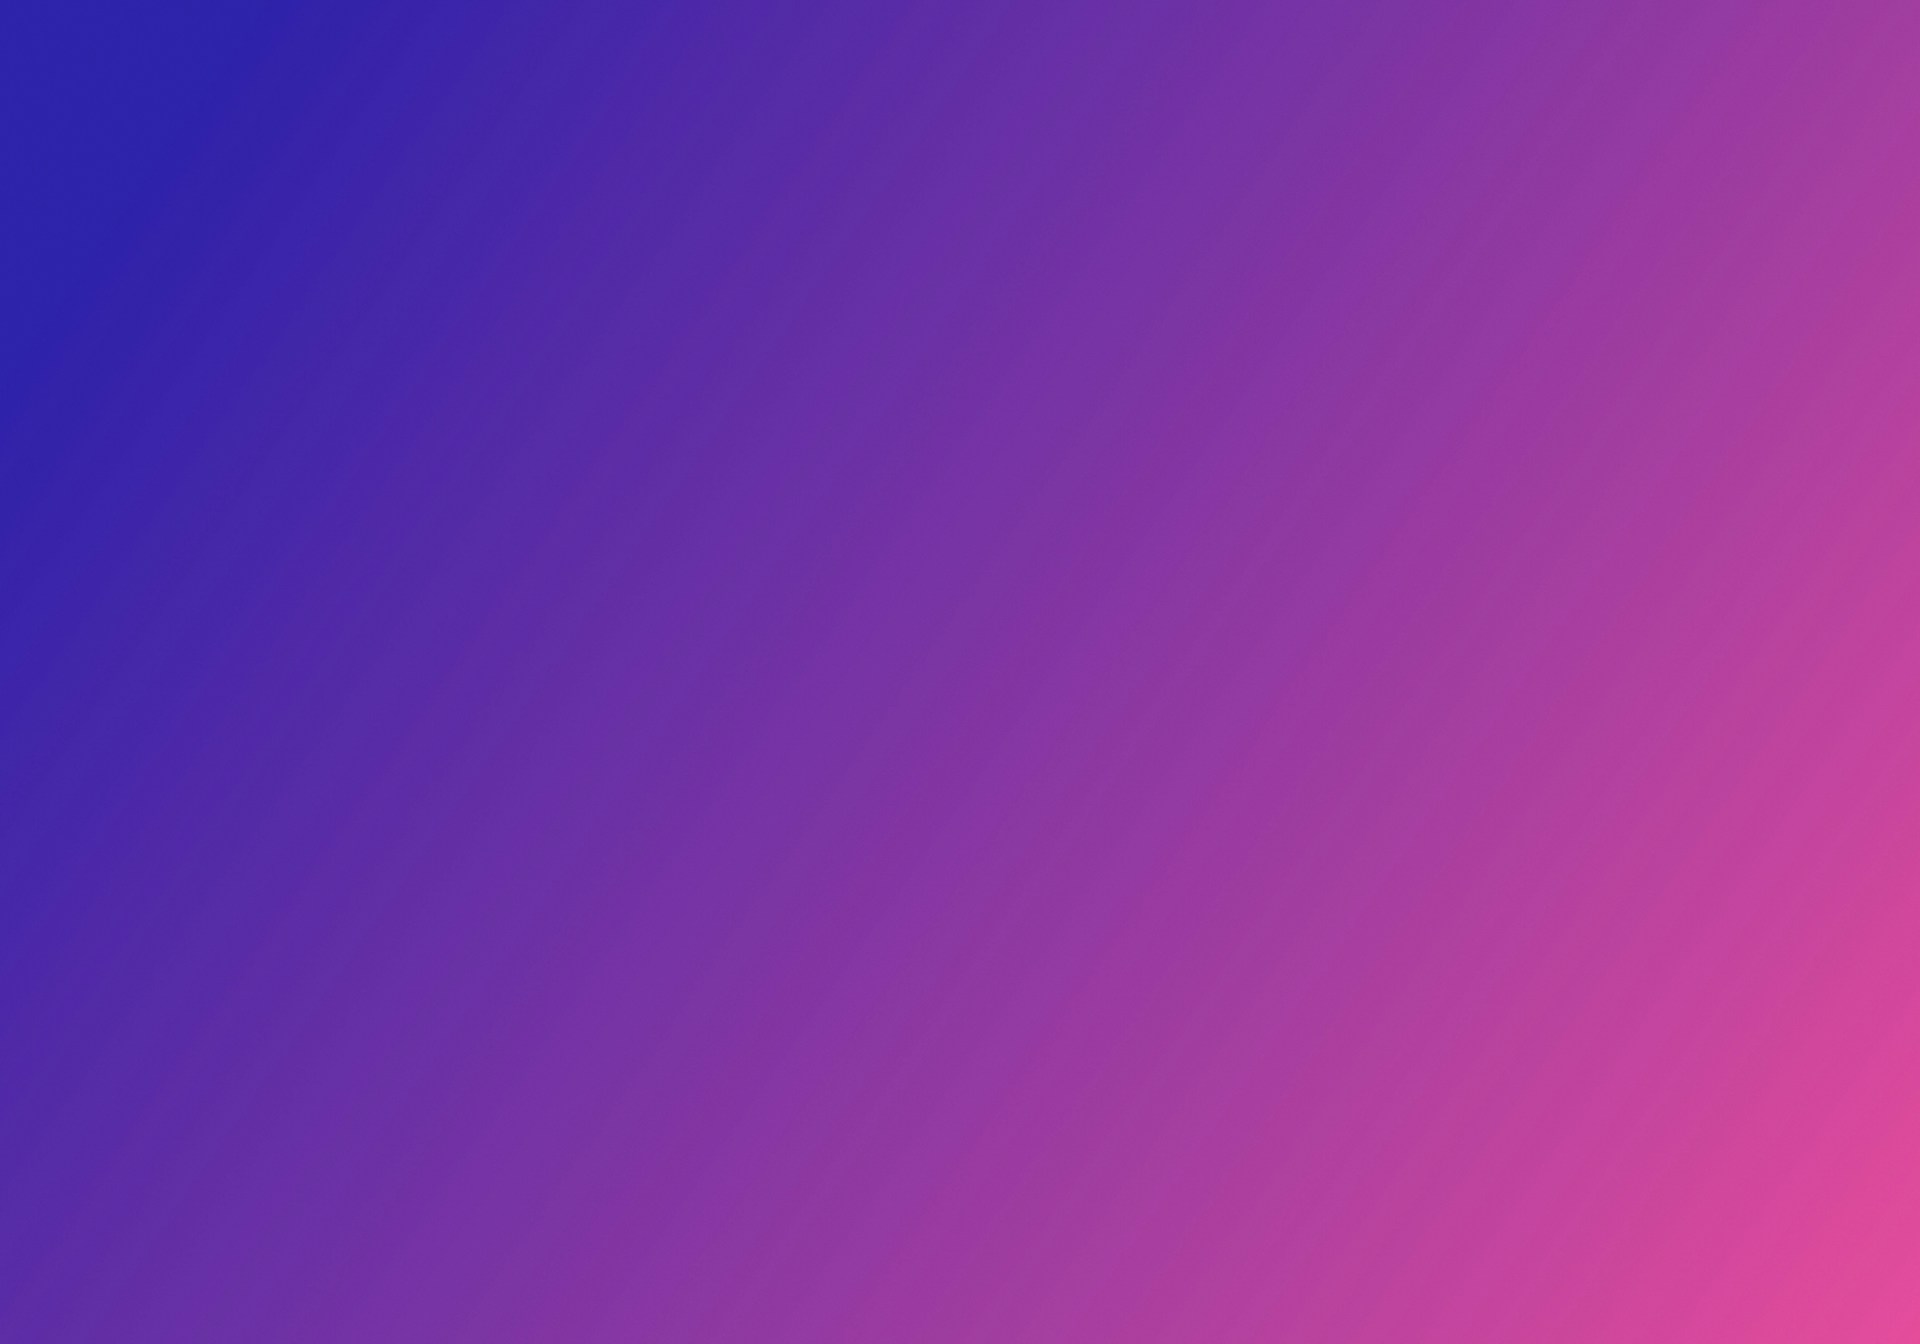 Blue to purple gradient